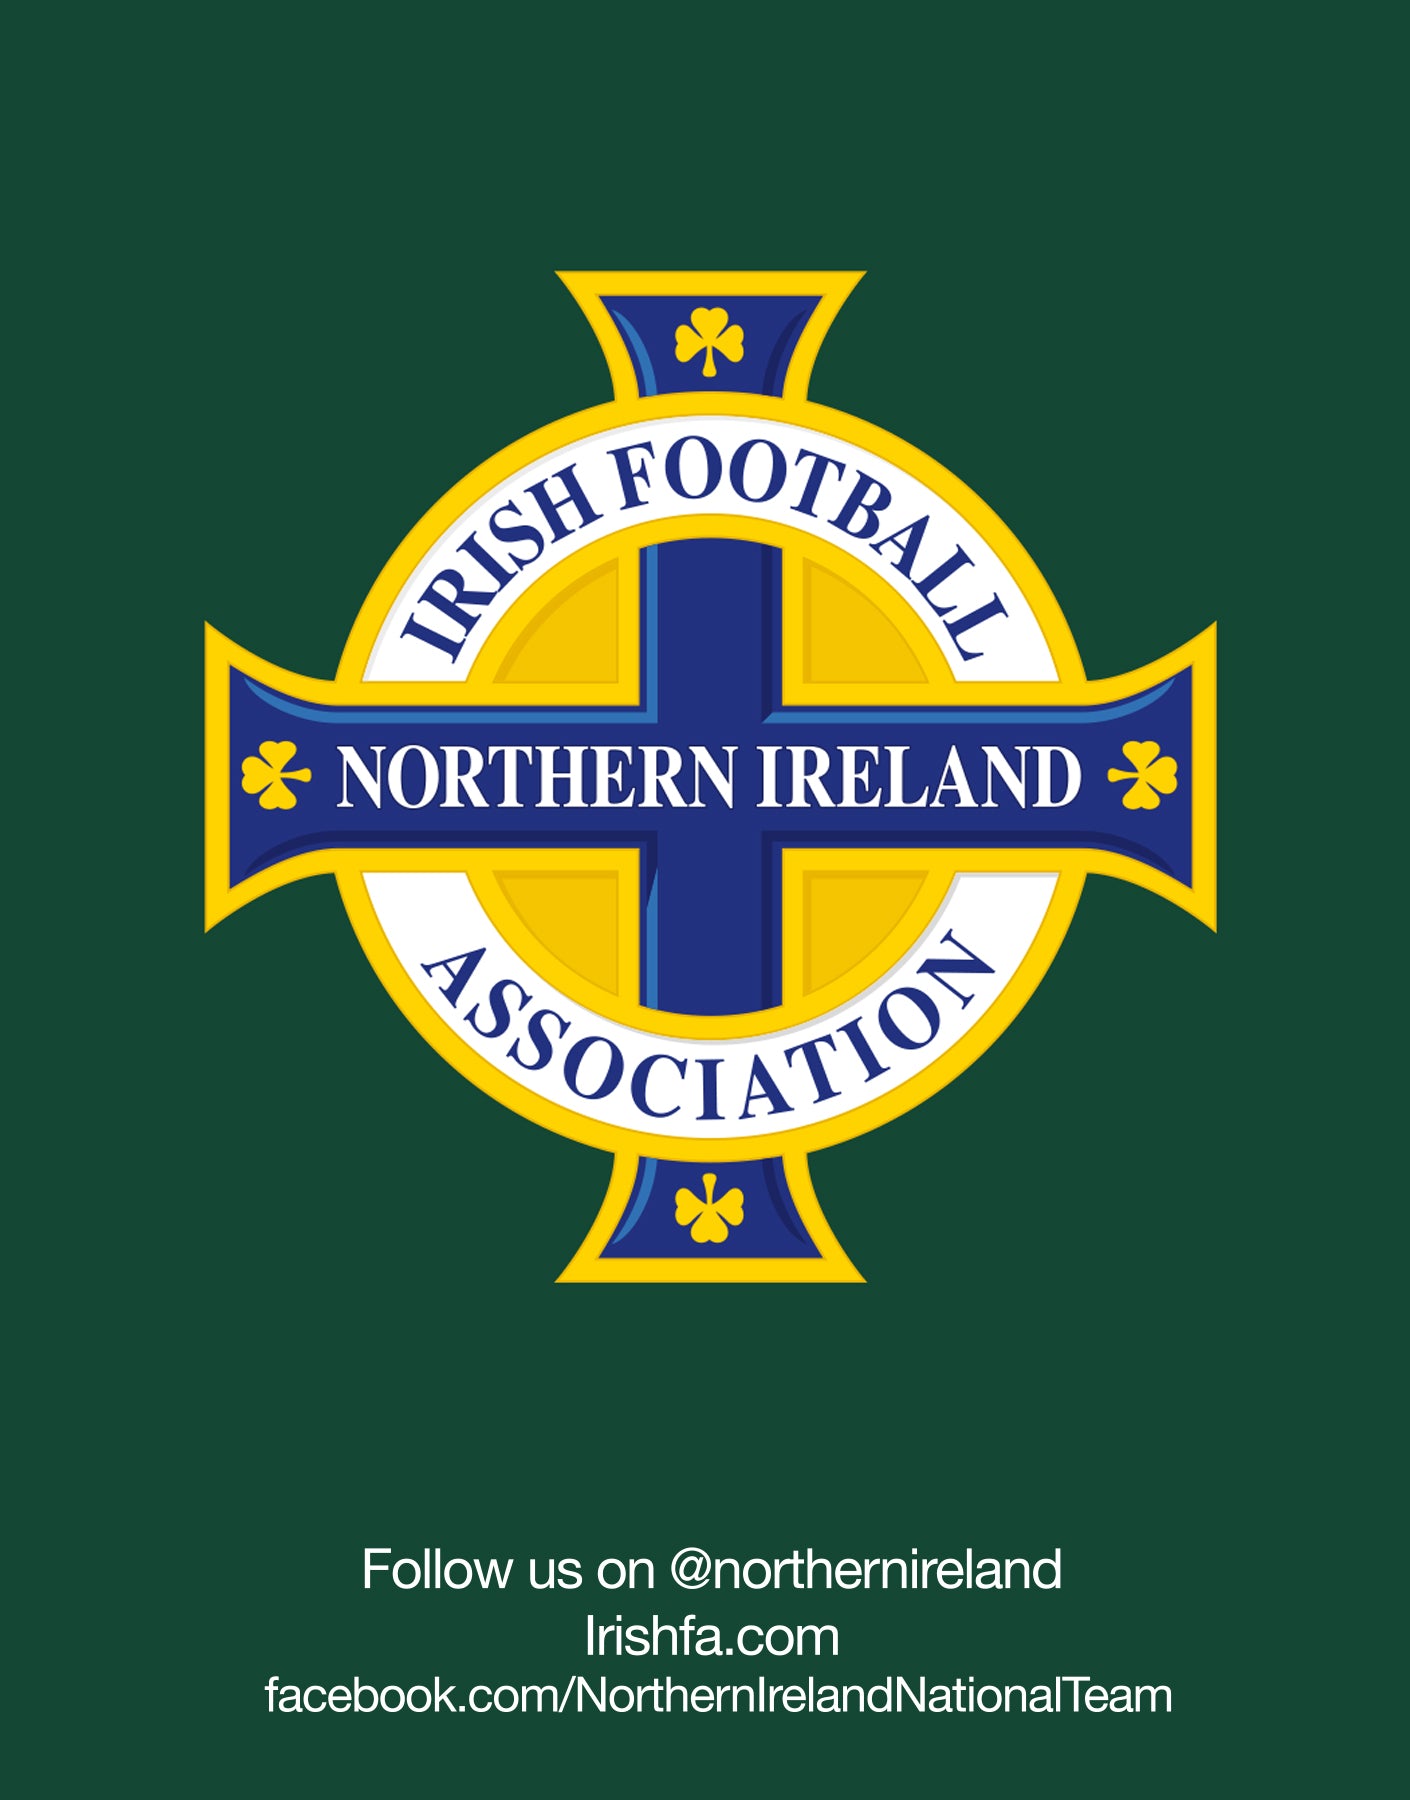 Official Northern Ireland Zip-Neck Sweatshirt - Black - The World Football Store